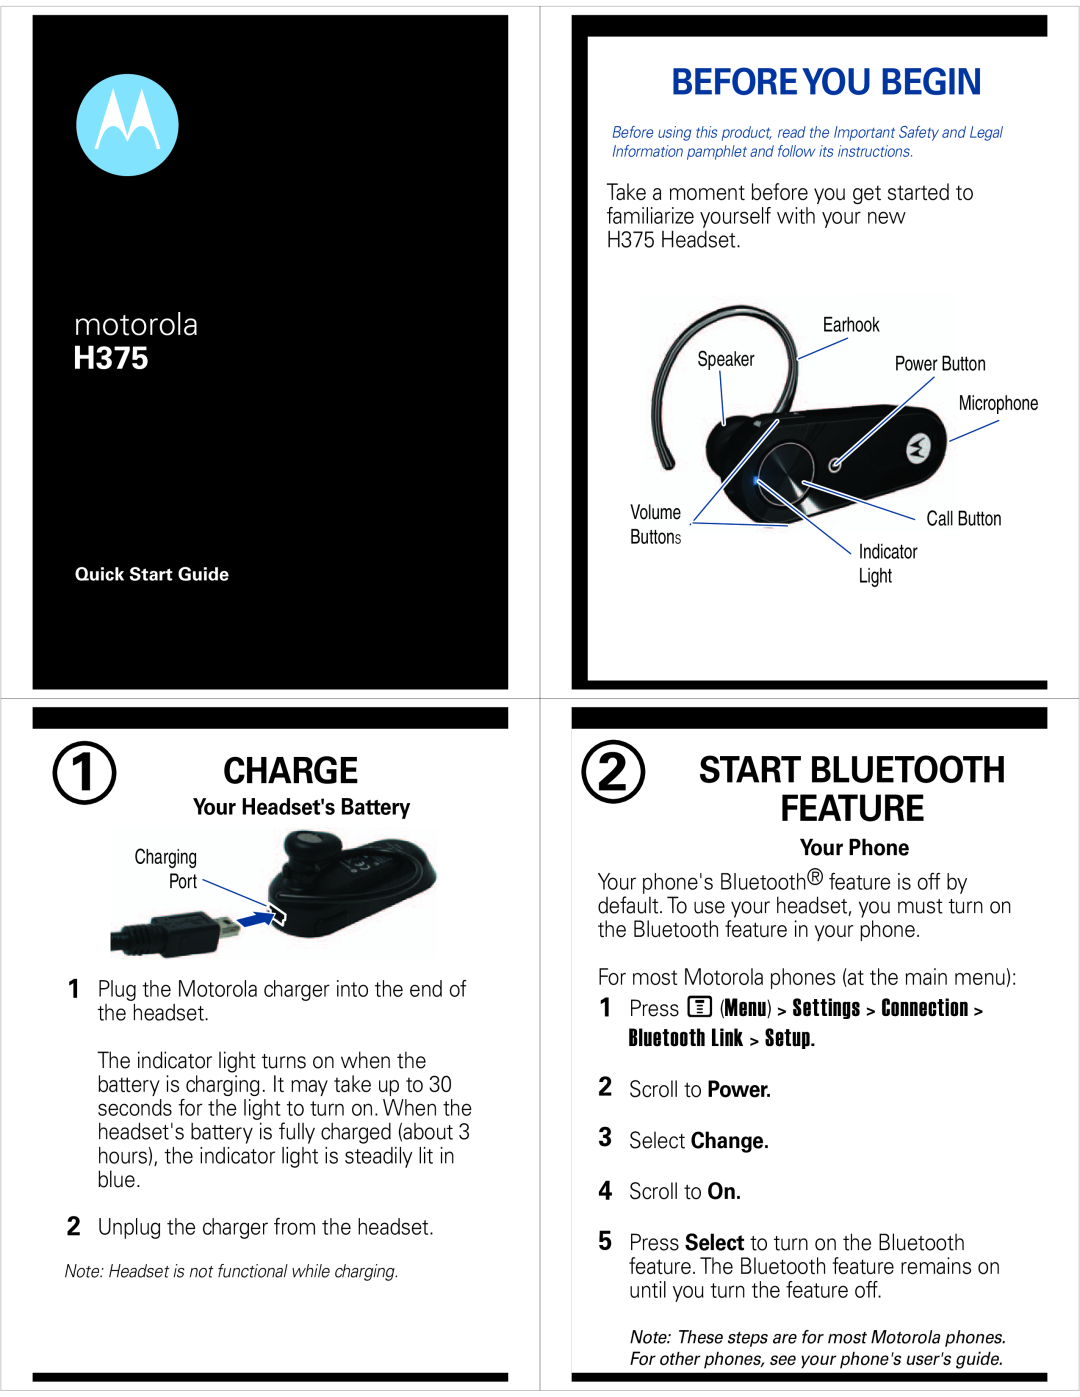 Motorola H375 quick start Charge, Start Bluetooth, Press M Menu Settings Connection, Bluetooth Link Setup, motorola 